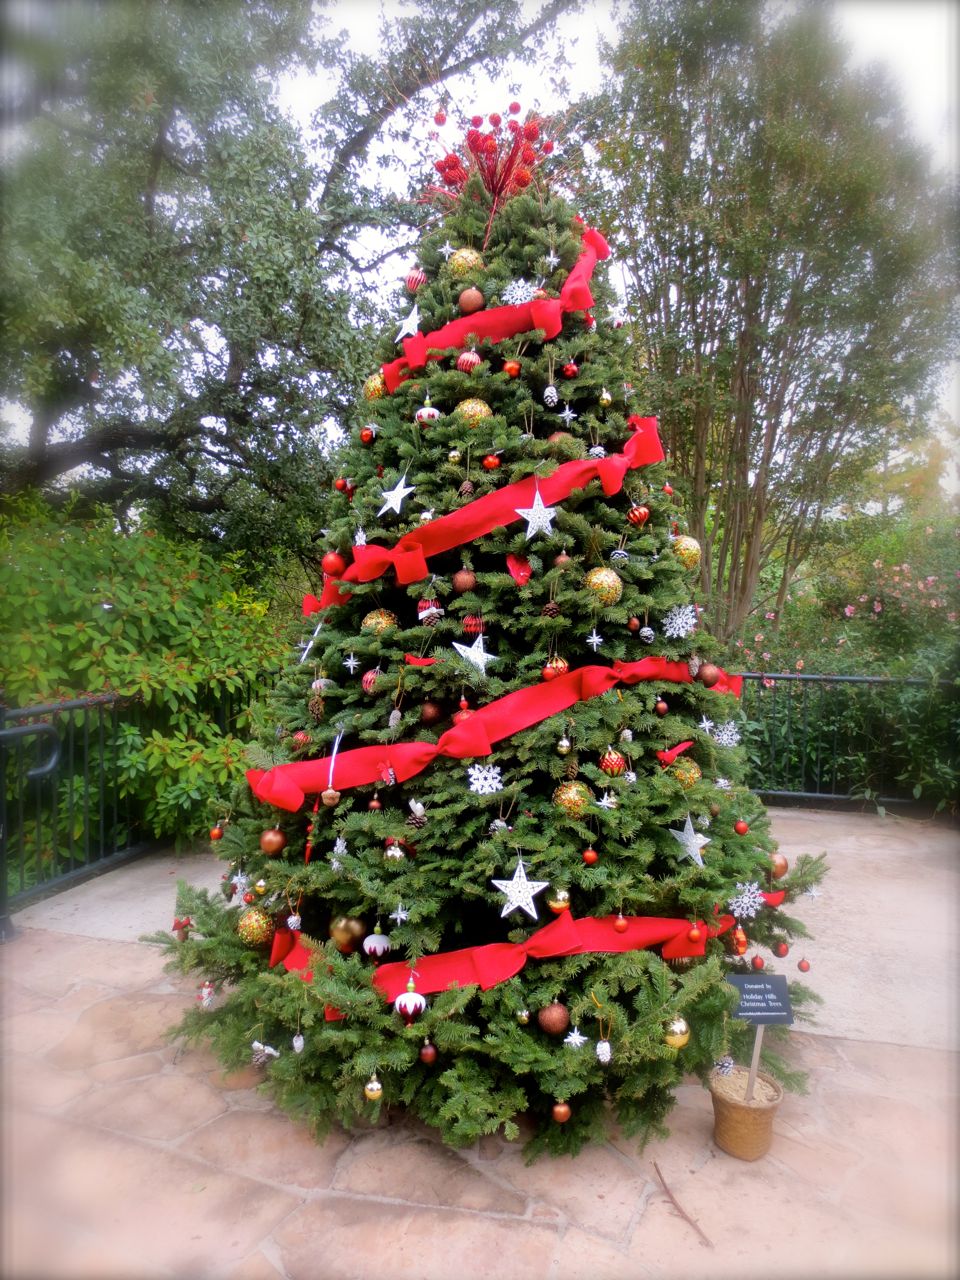 Christmas Tree - Holidays in Bloom at the San Antonio Botanical Garden | San Antonio Charter Moms